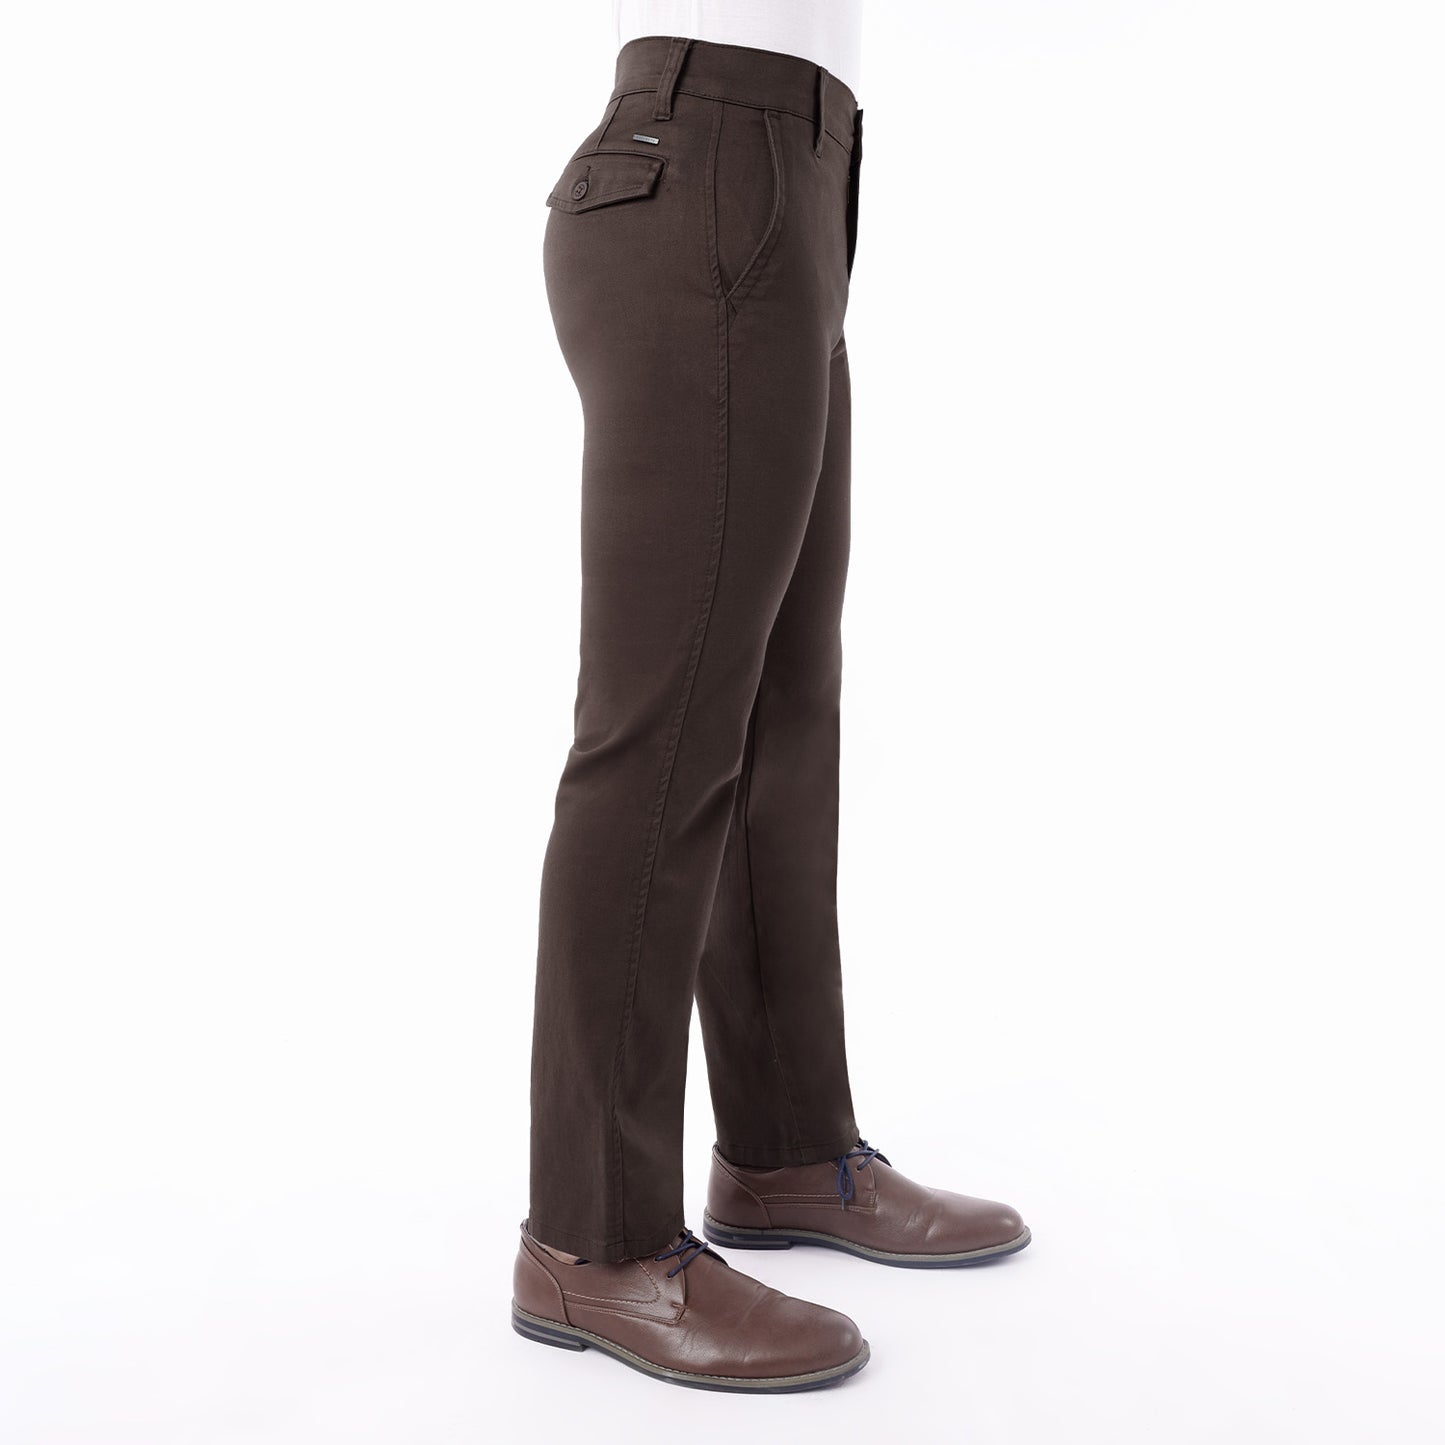 Pantalon Drill Hombre Satinado Regular Fit Marrón - 230885